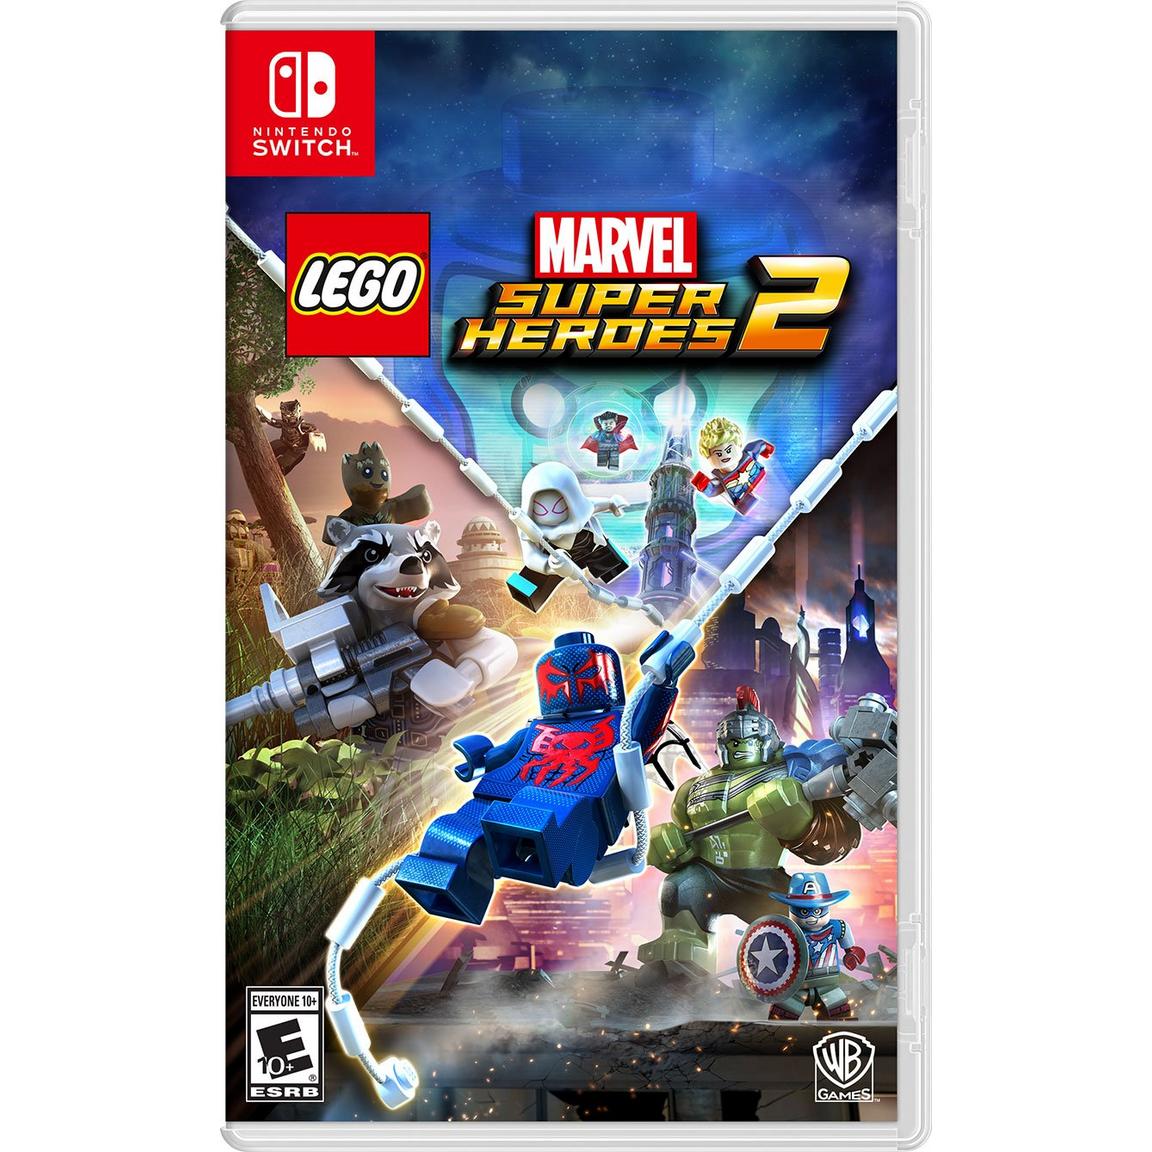 Видеоигра LEGO Marvel Super Heroes 2 - Nintendo Switch игра lego marvel super heroes код загрузки digital edition для nintendo switch карта активации